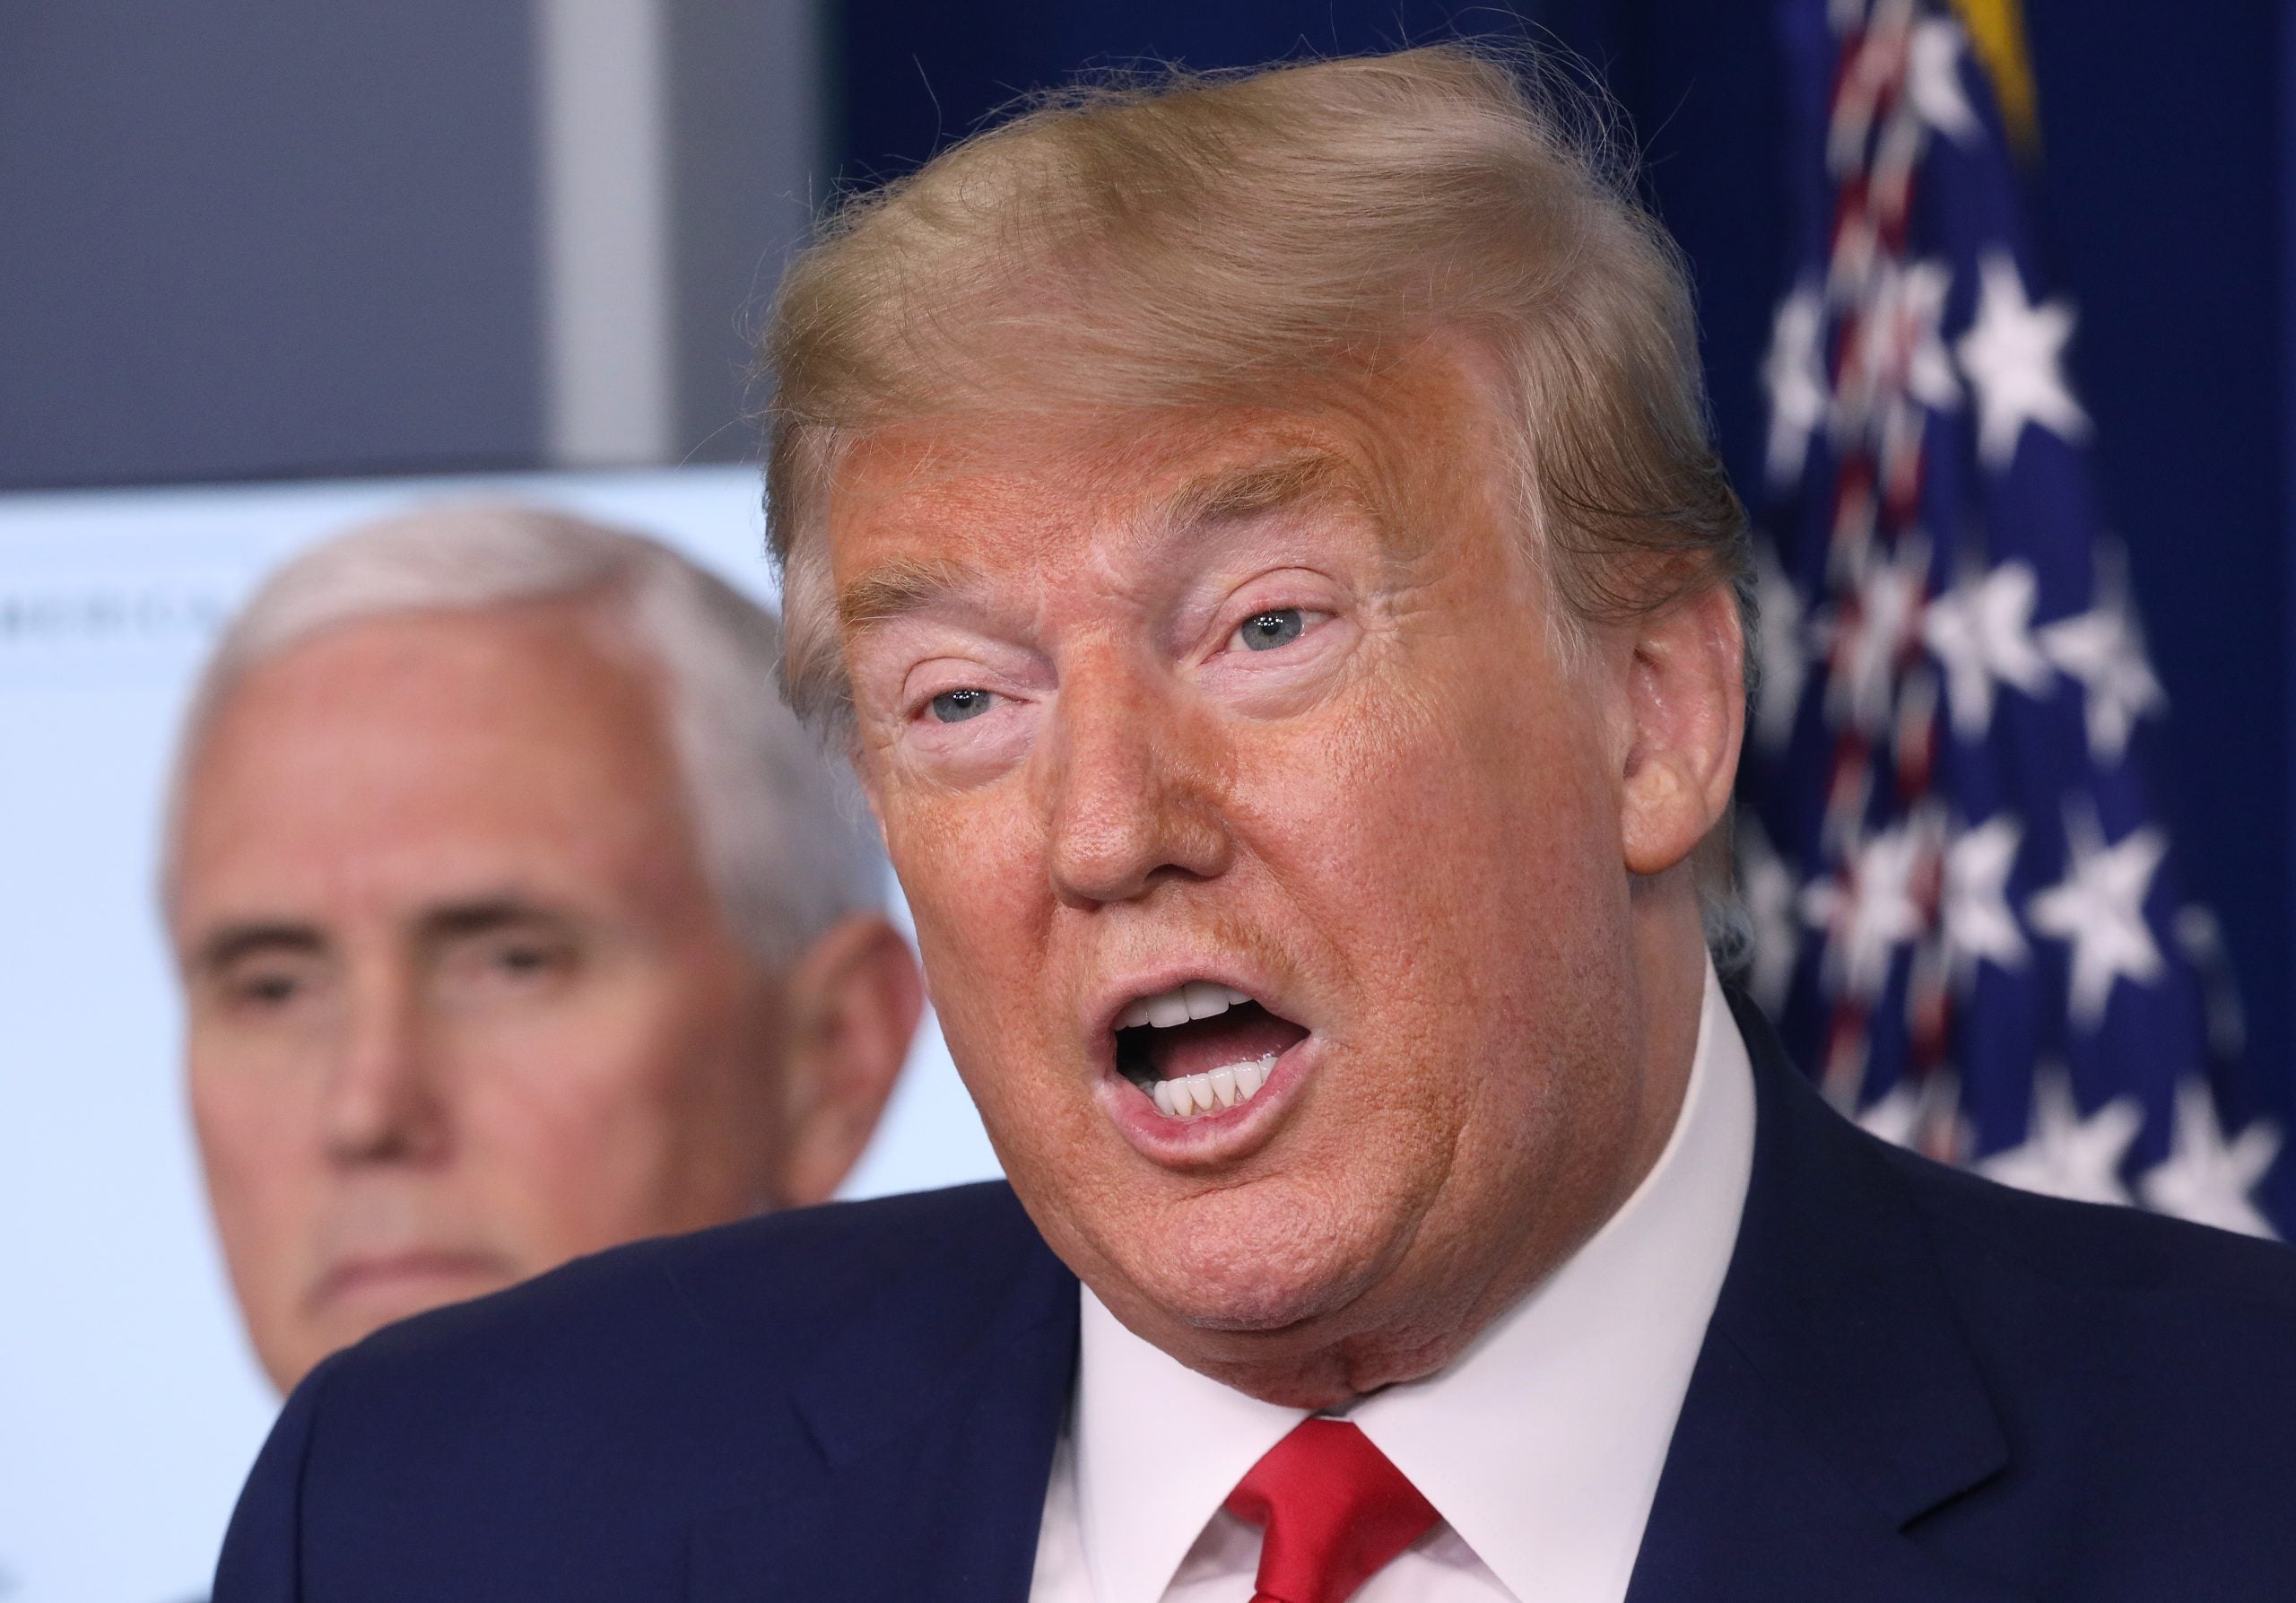 Trump Claims He’s Suspending Immigration Due To ‘Coronavirus Threat’